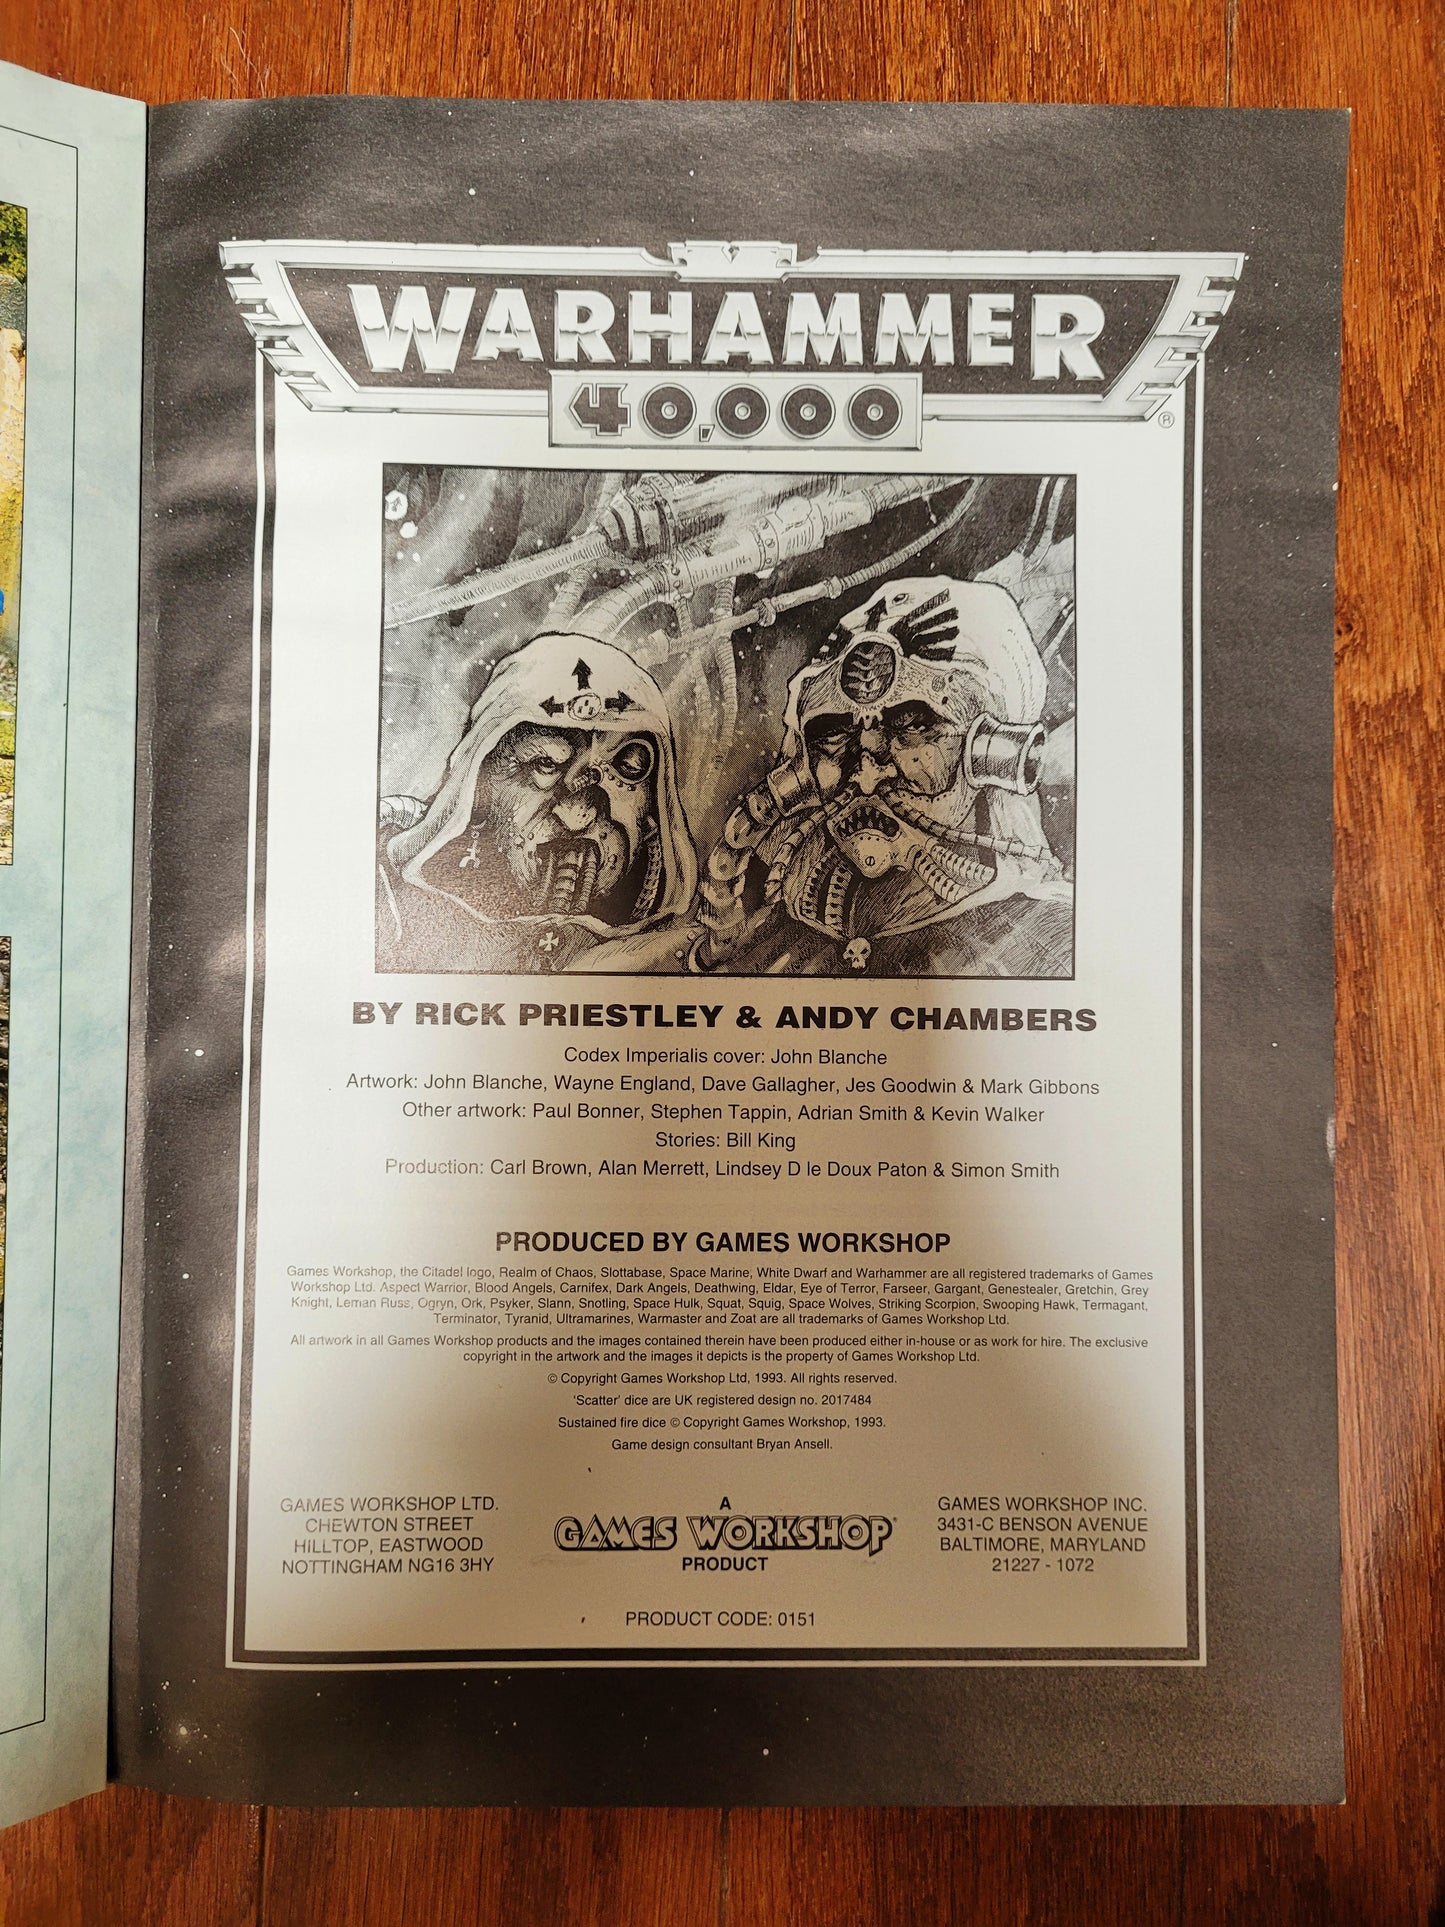 3 Original(1993)Warhammer: RULEBOOK WARGEAR CODEX